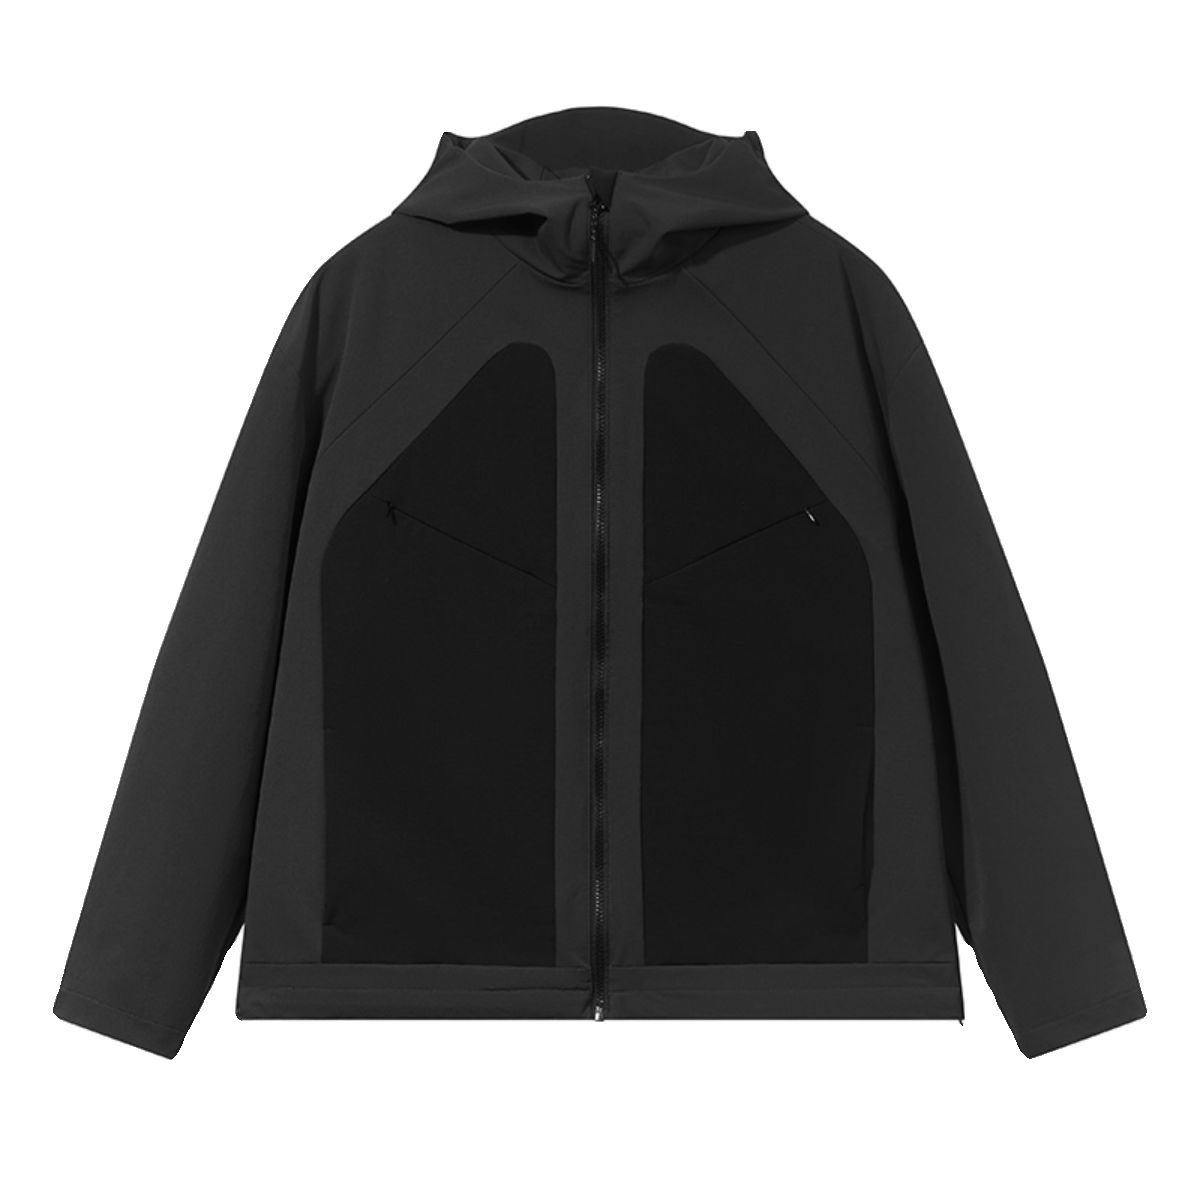 Spliced Hooded Jacket Korean Street Fashion Jacket By 7440 37 1 Shop Online at OH Vault